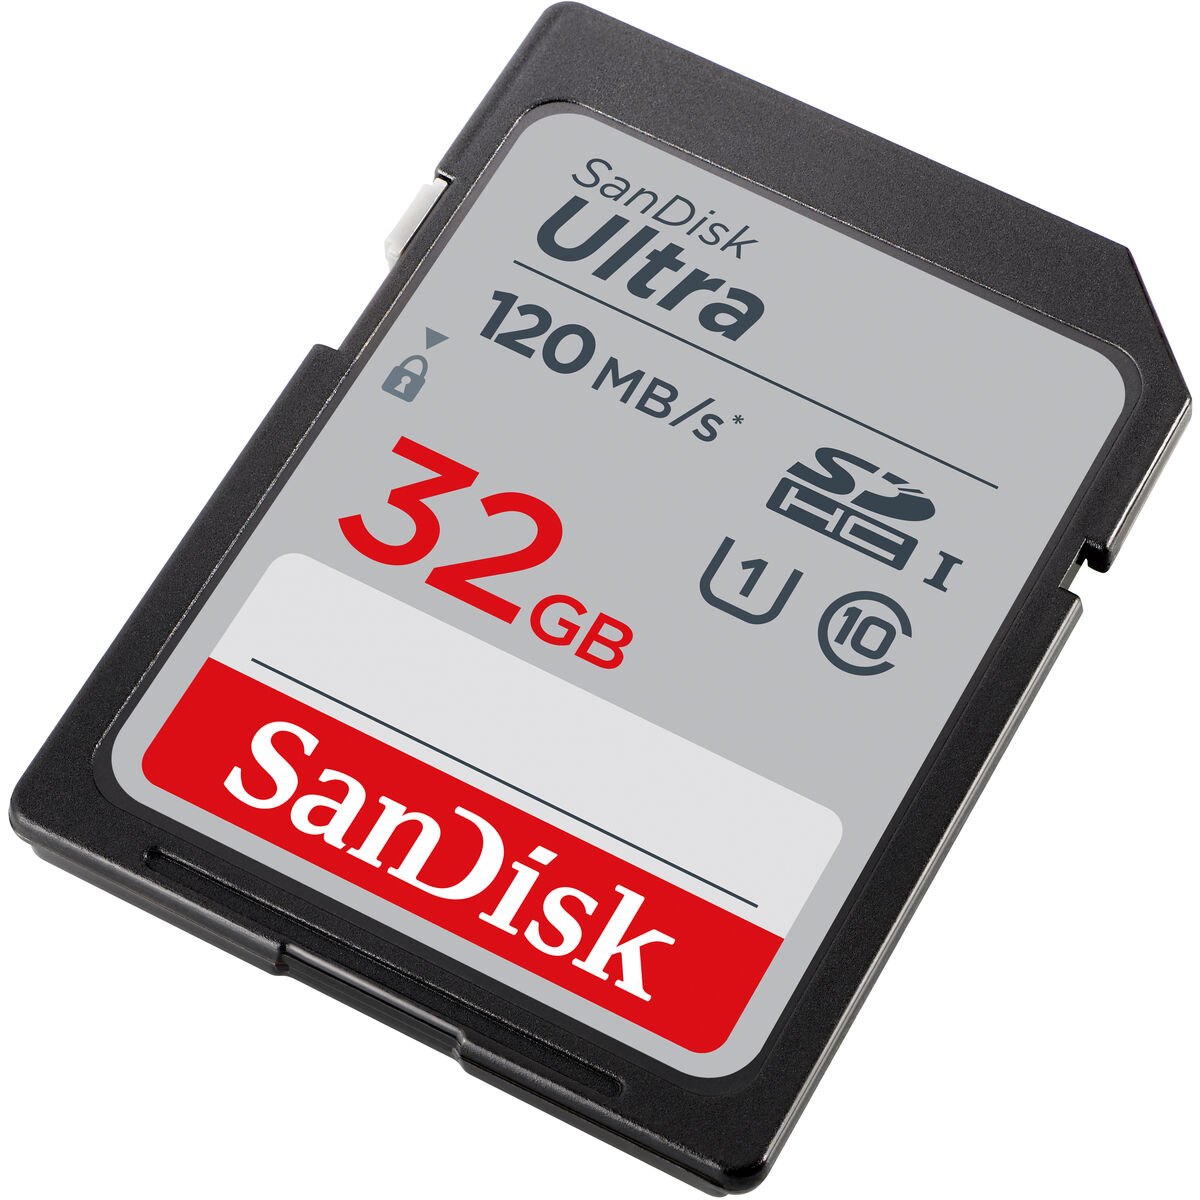 Ultra, MB/s SDXC Speicherkarte, GB, 32 SANDISK 120